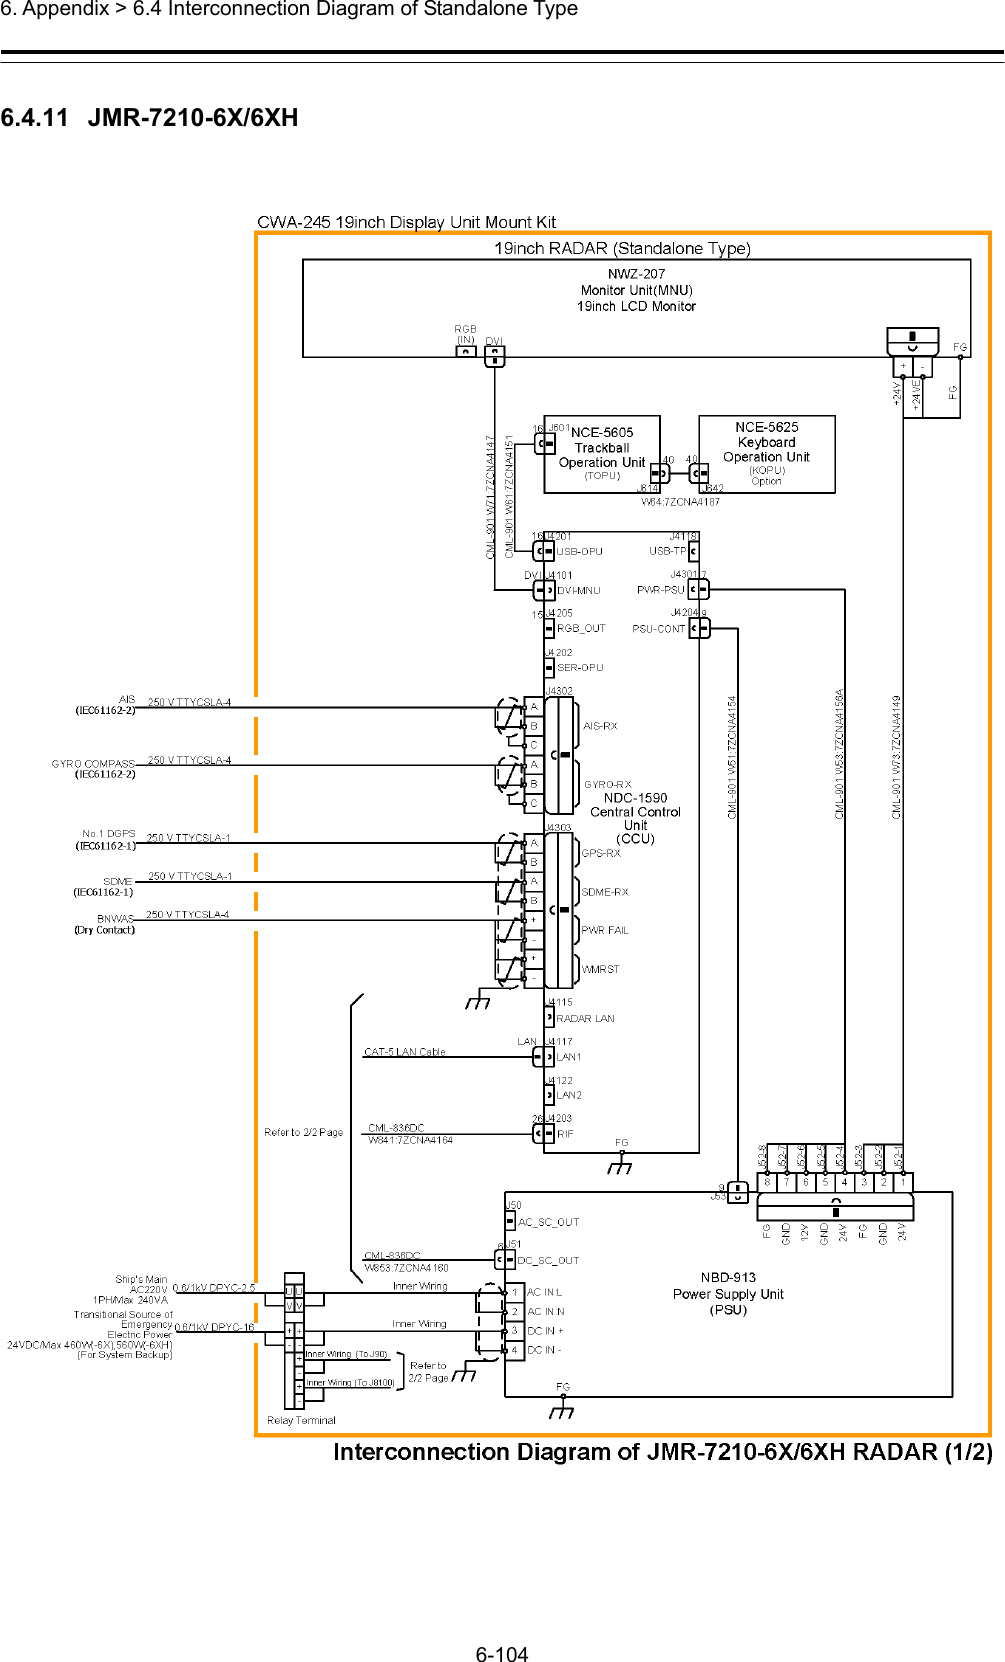  6. Appendix &gt; 6.4 Interconnection Diagram of Standalone Type 6-104  6.4.11  JMR-7210-6X/6XH 